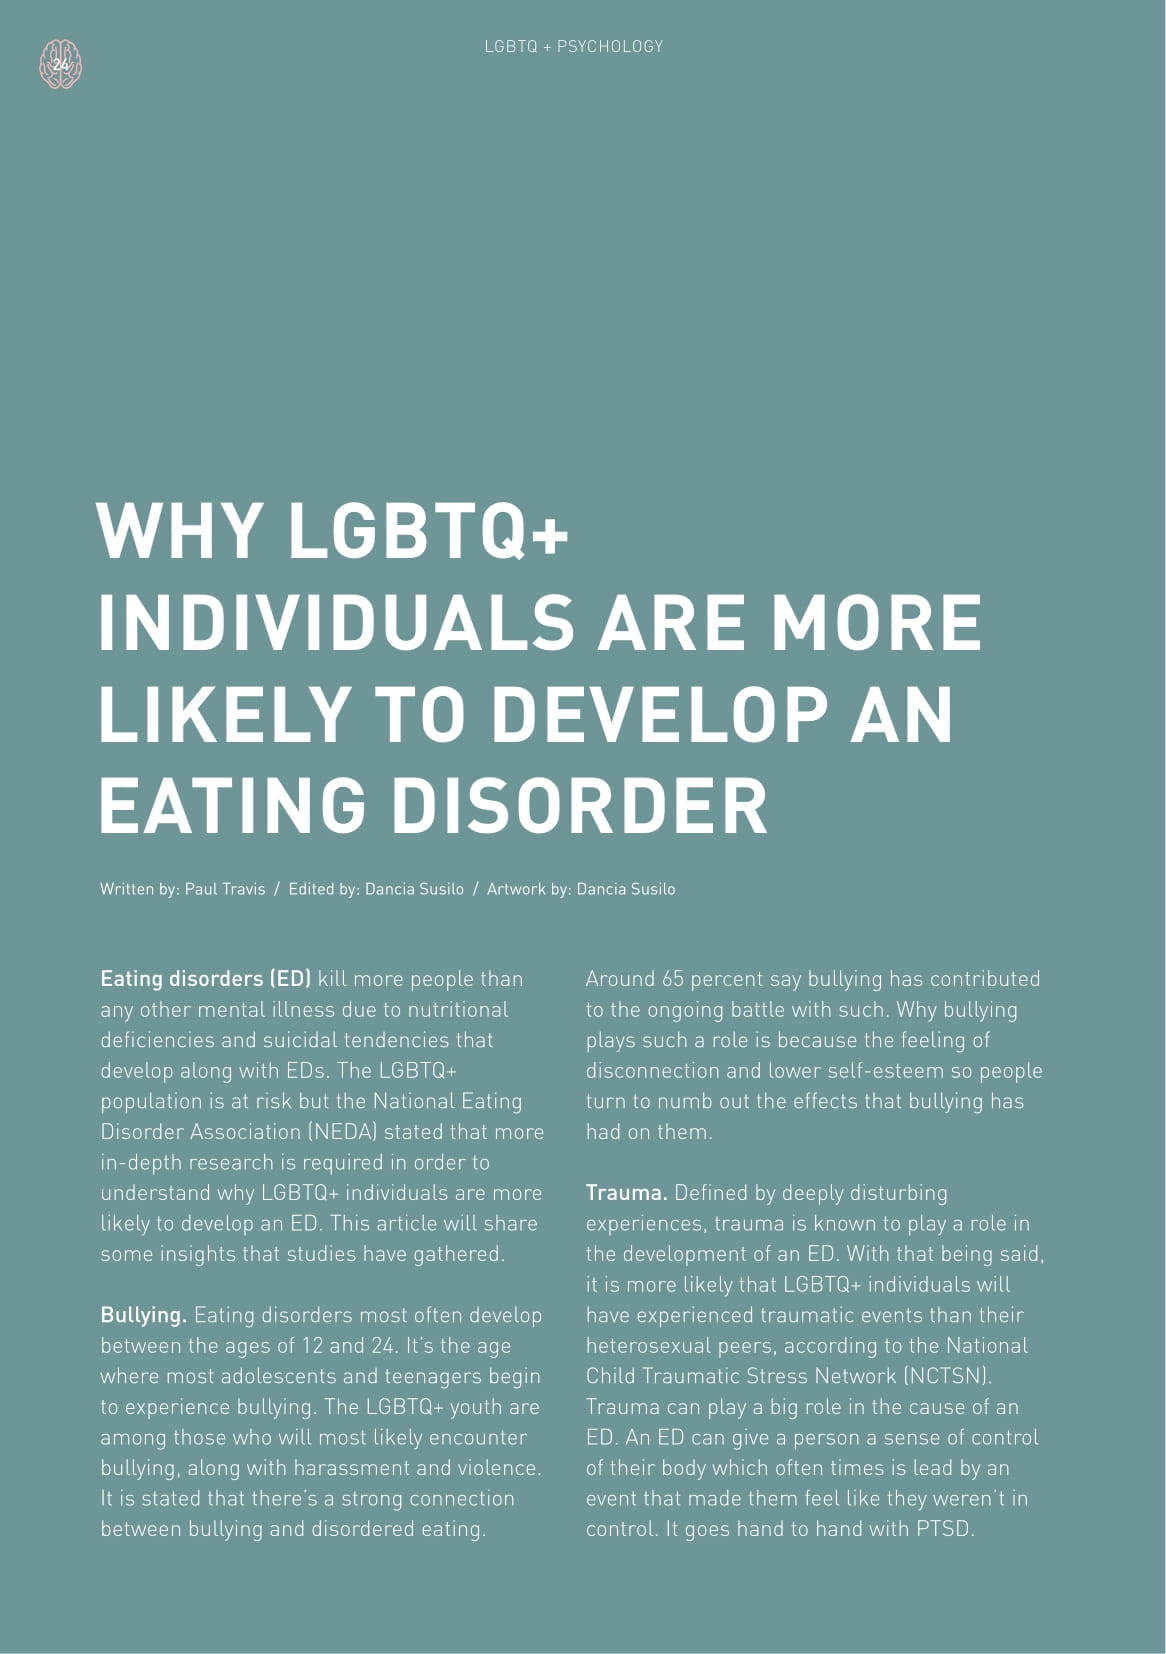 Psych2Go Magazine #18 - Binge Eating disorder (Digital)